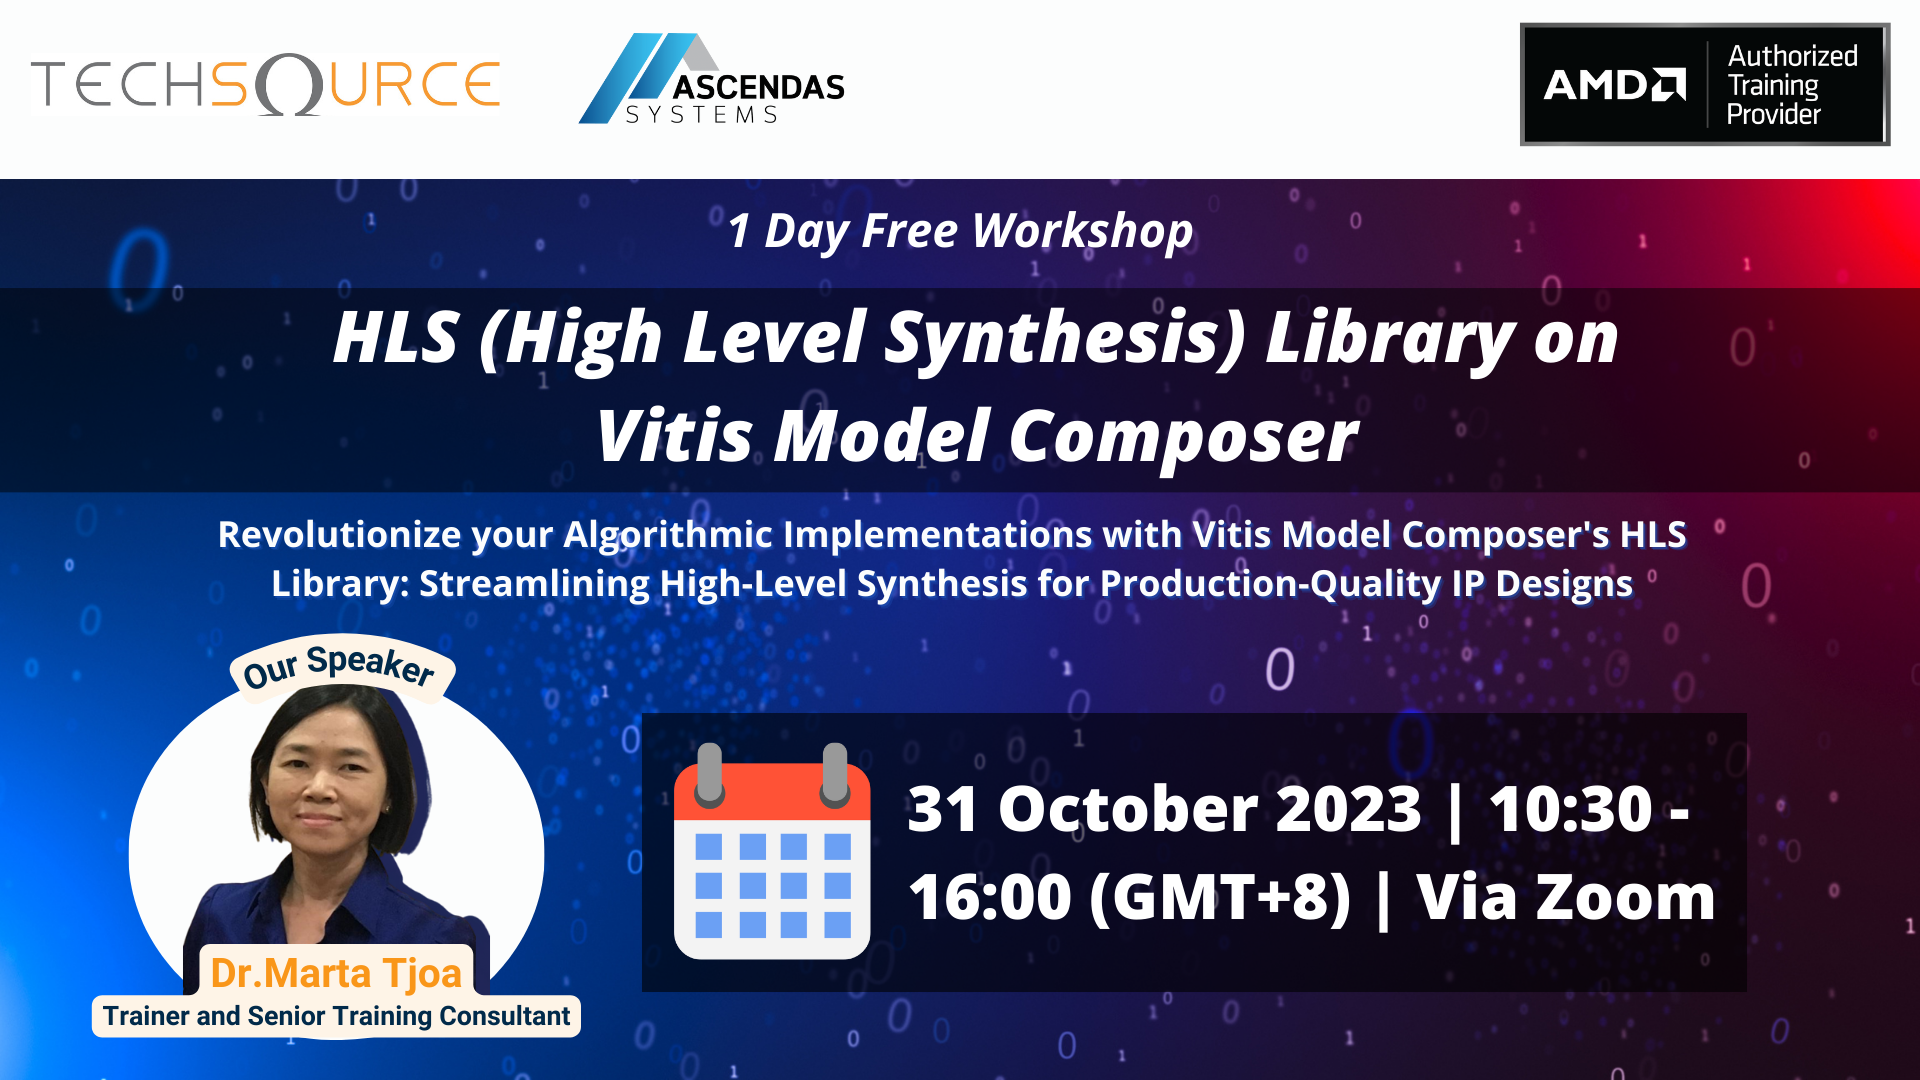 [1 Day Free Workshop] HLS (High Level Synthesis) Library on Vitis Model Composer - 31 October 2023  1030 - 1600 (GMT+8)  Via Zoom (3)